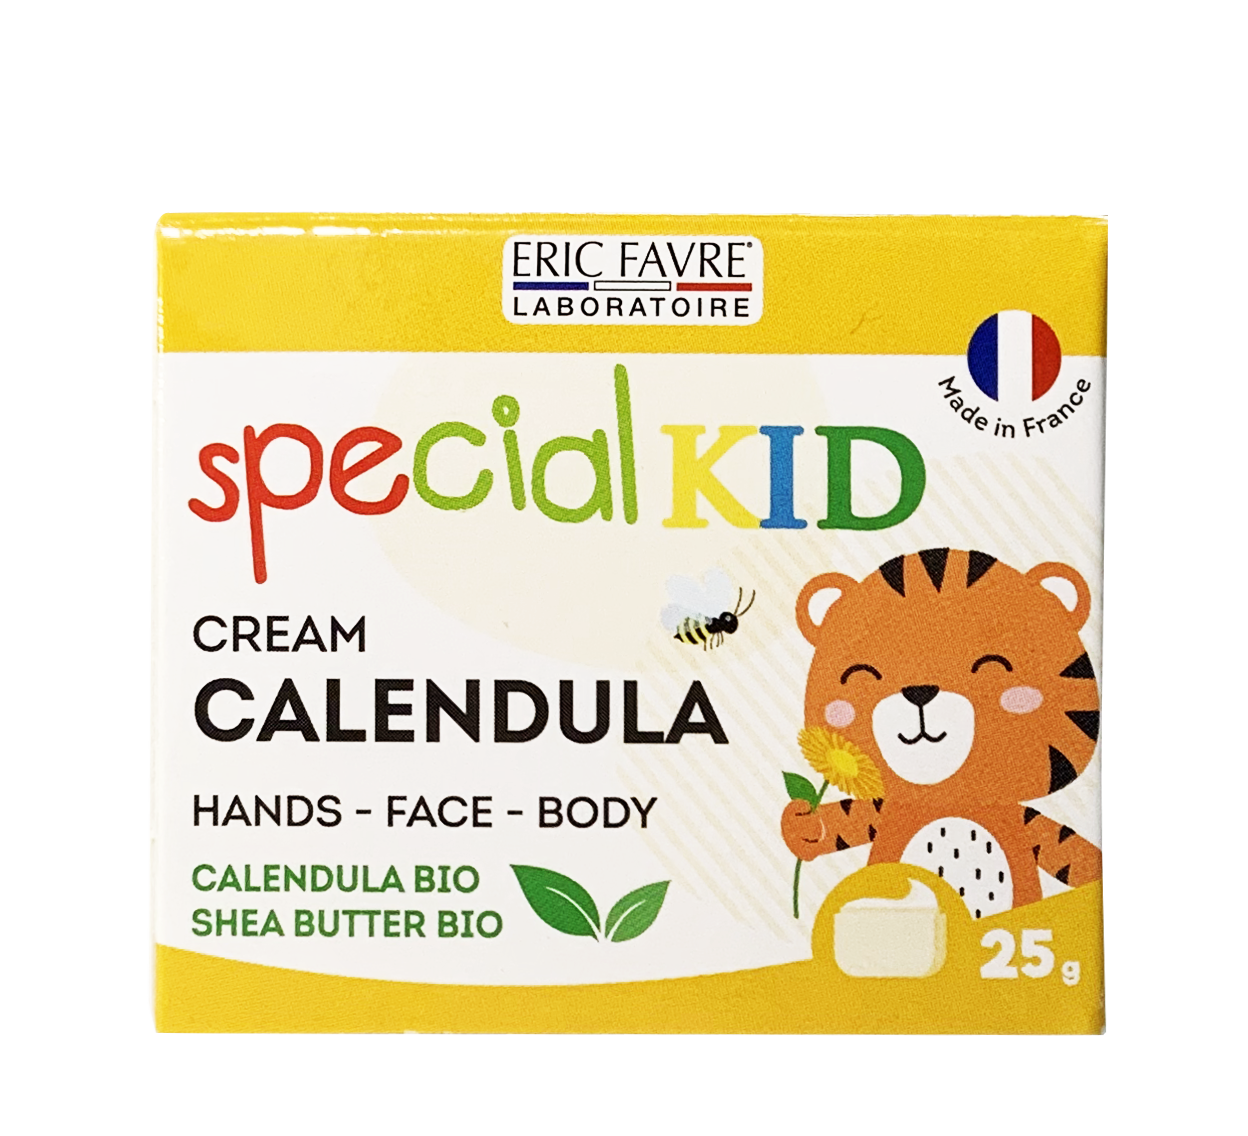  Special Kid Calendula Cream - Kem dưỡng da giúp cung cấp độ ẩm cho da, giúp làm mềm da, giúp da mịn màng  [Nhập khẩu Pháp] 